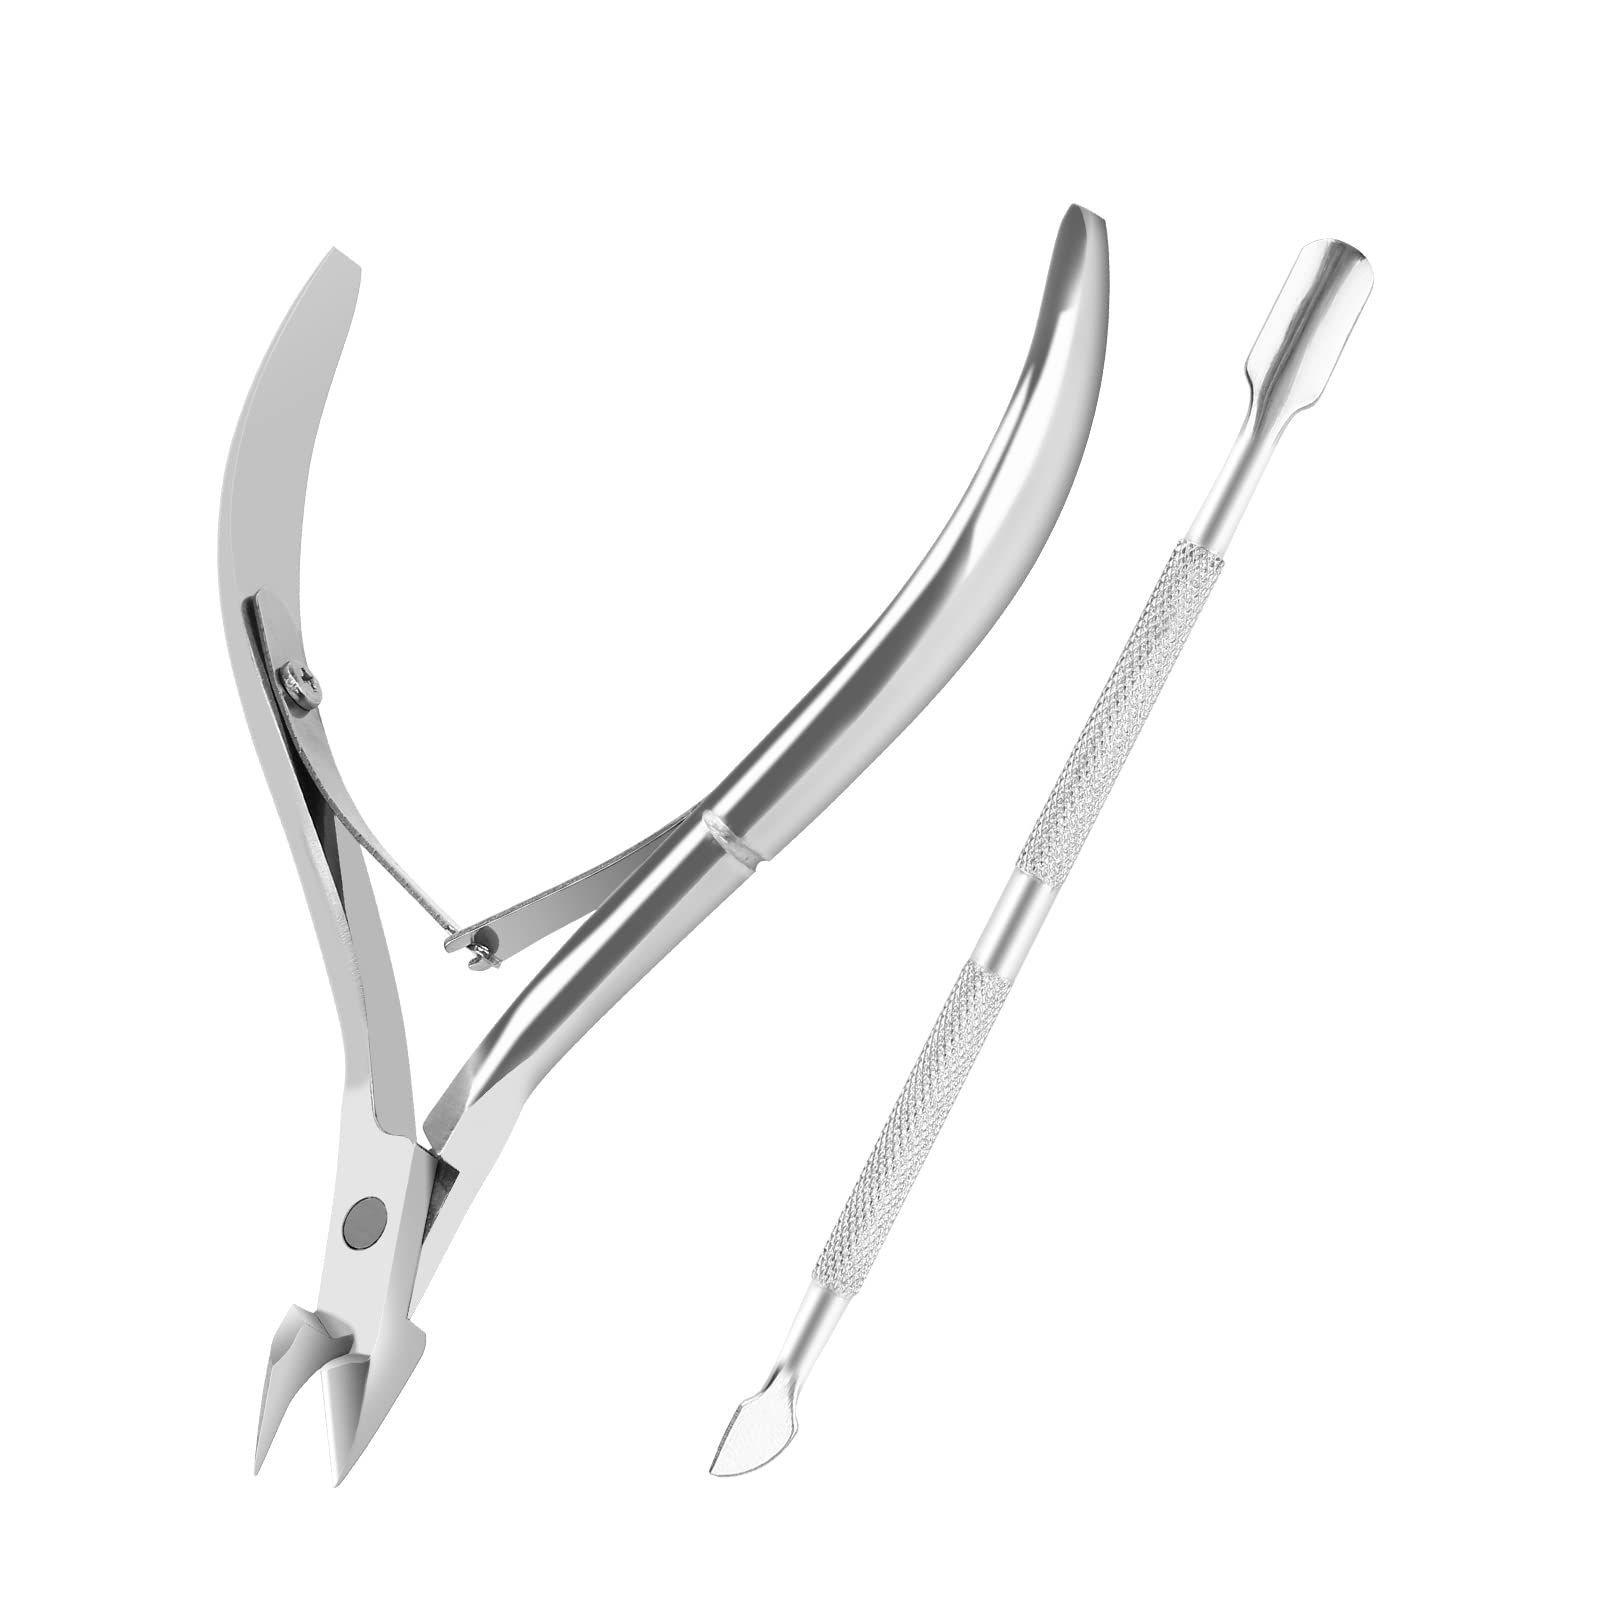  cuticle cutter metal obeject for cutting